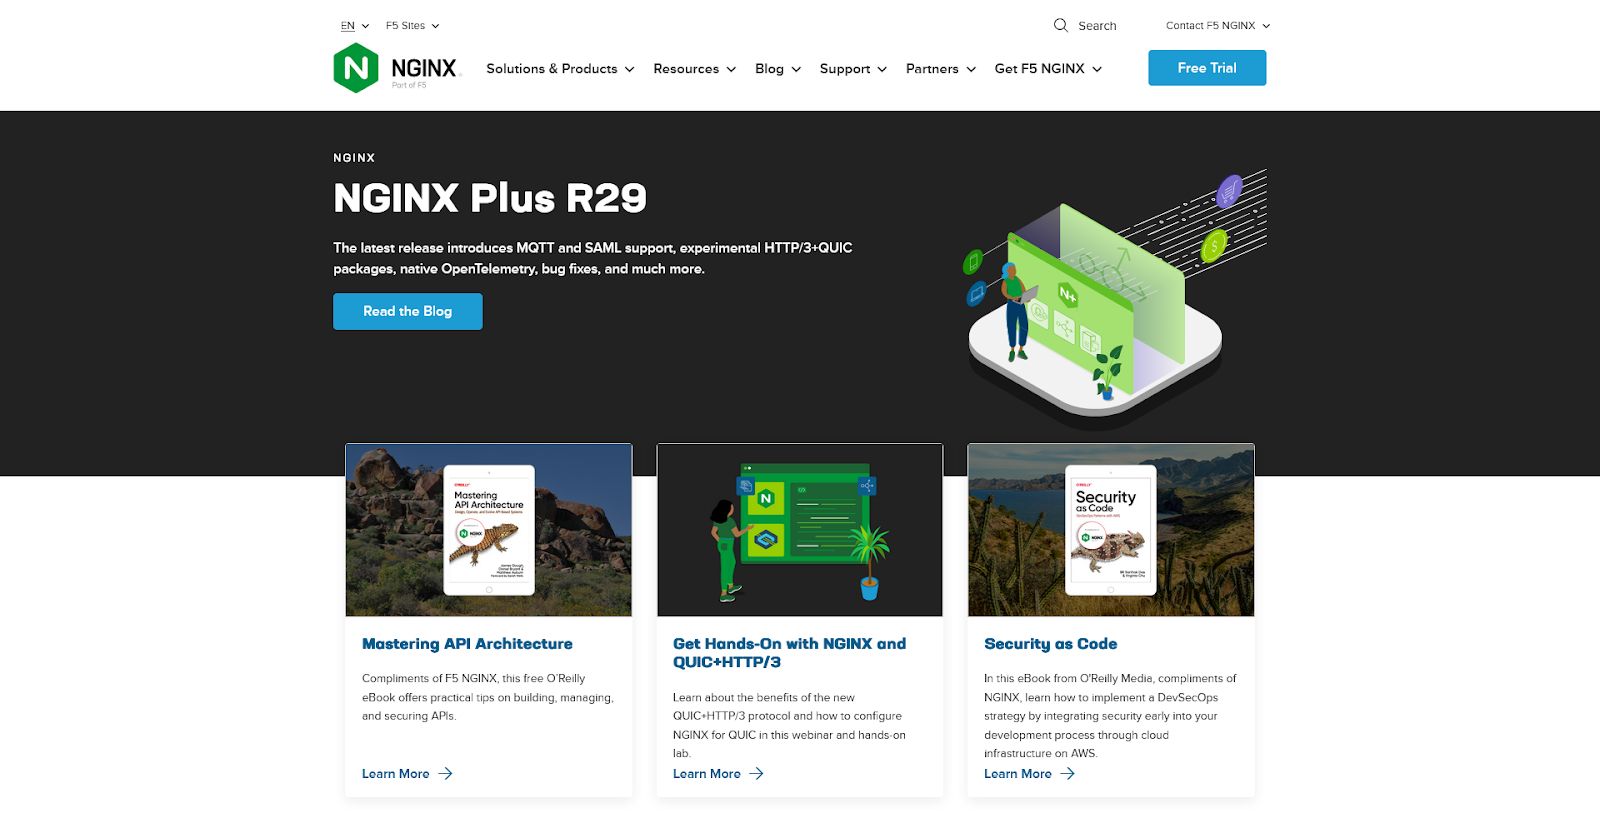 NGINX website homepage.